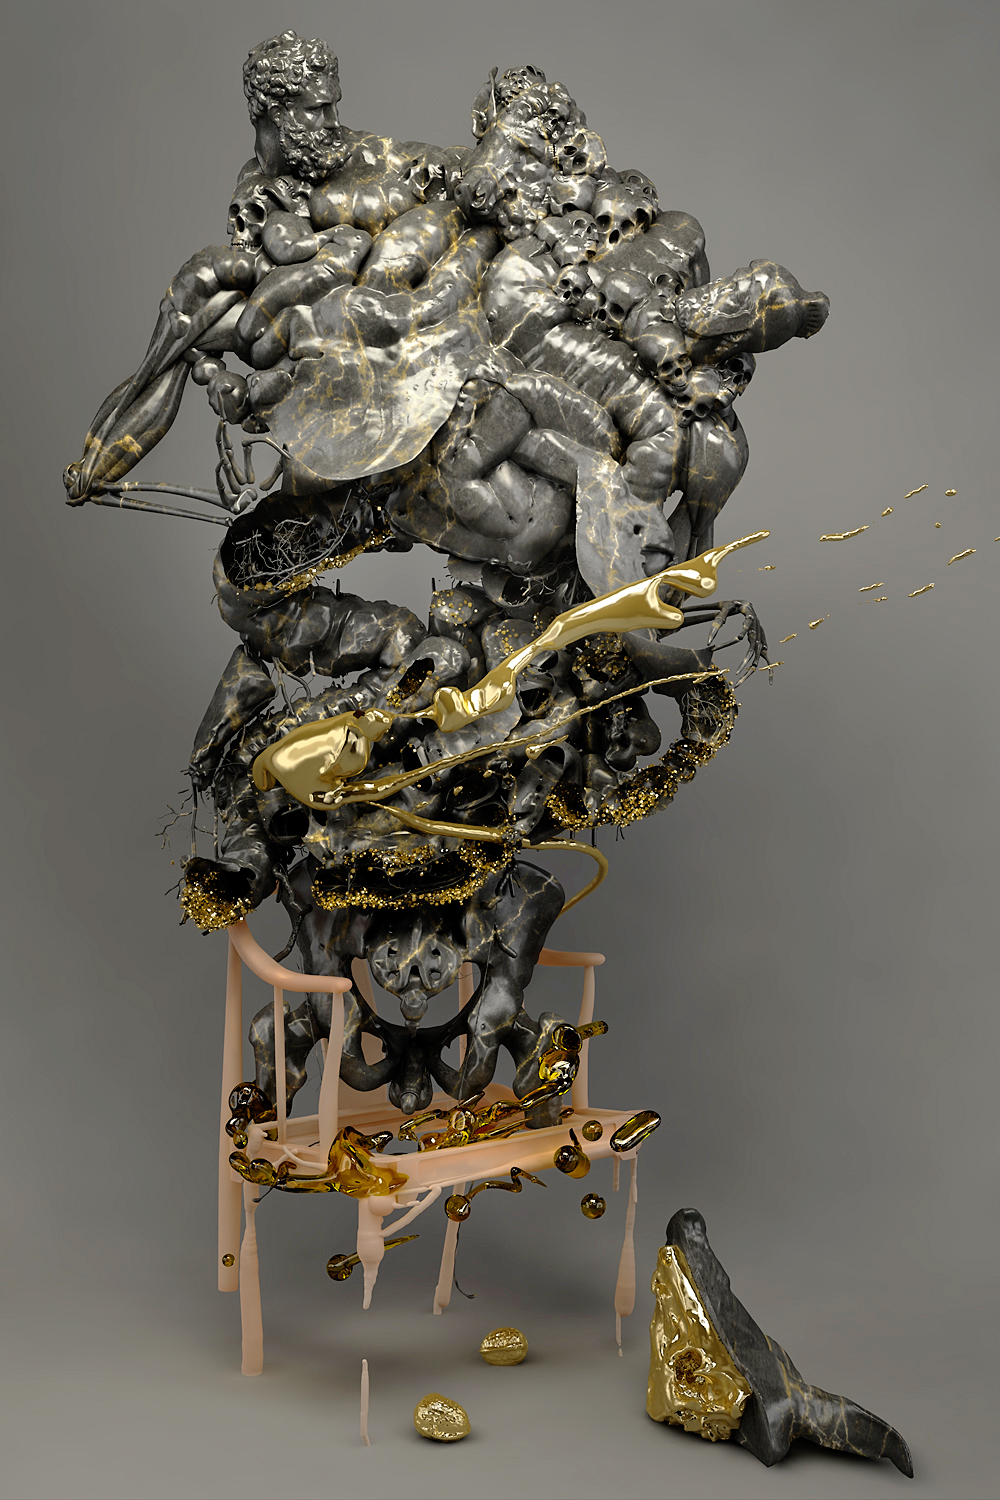 3D CGI dark digital Render 3dcoat Sculpt c4d 3D Marble gold skin acephales anarchy bataille anarchism